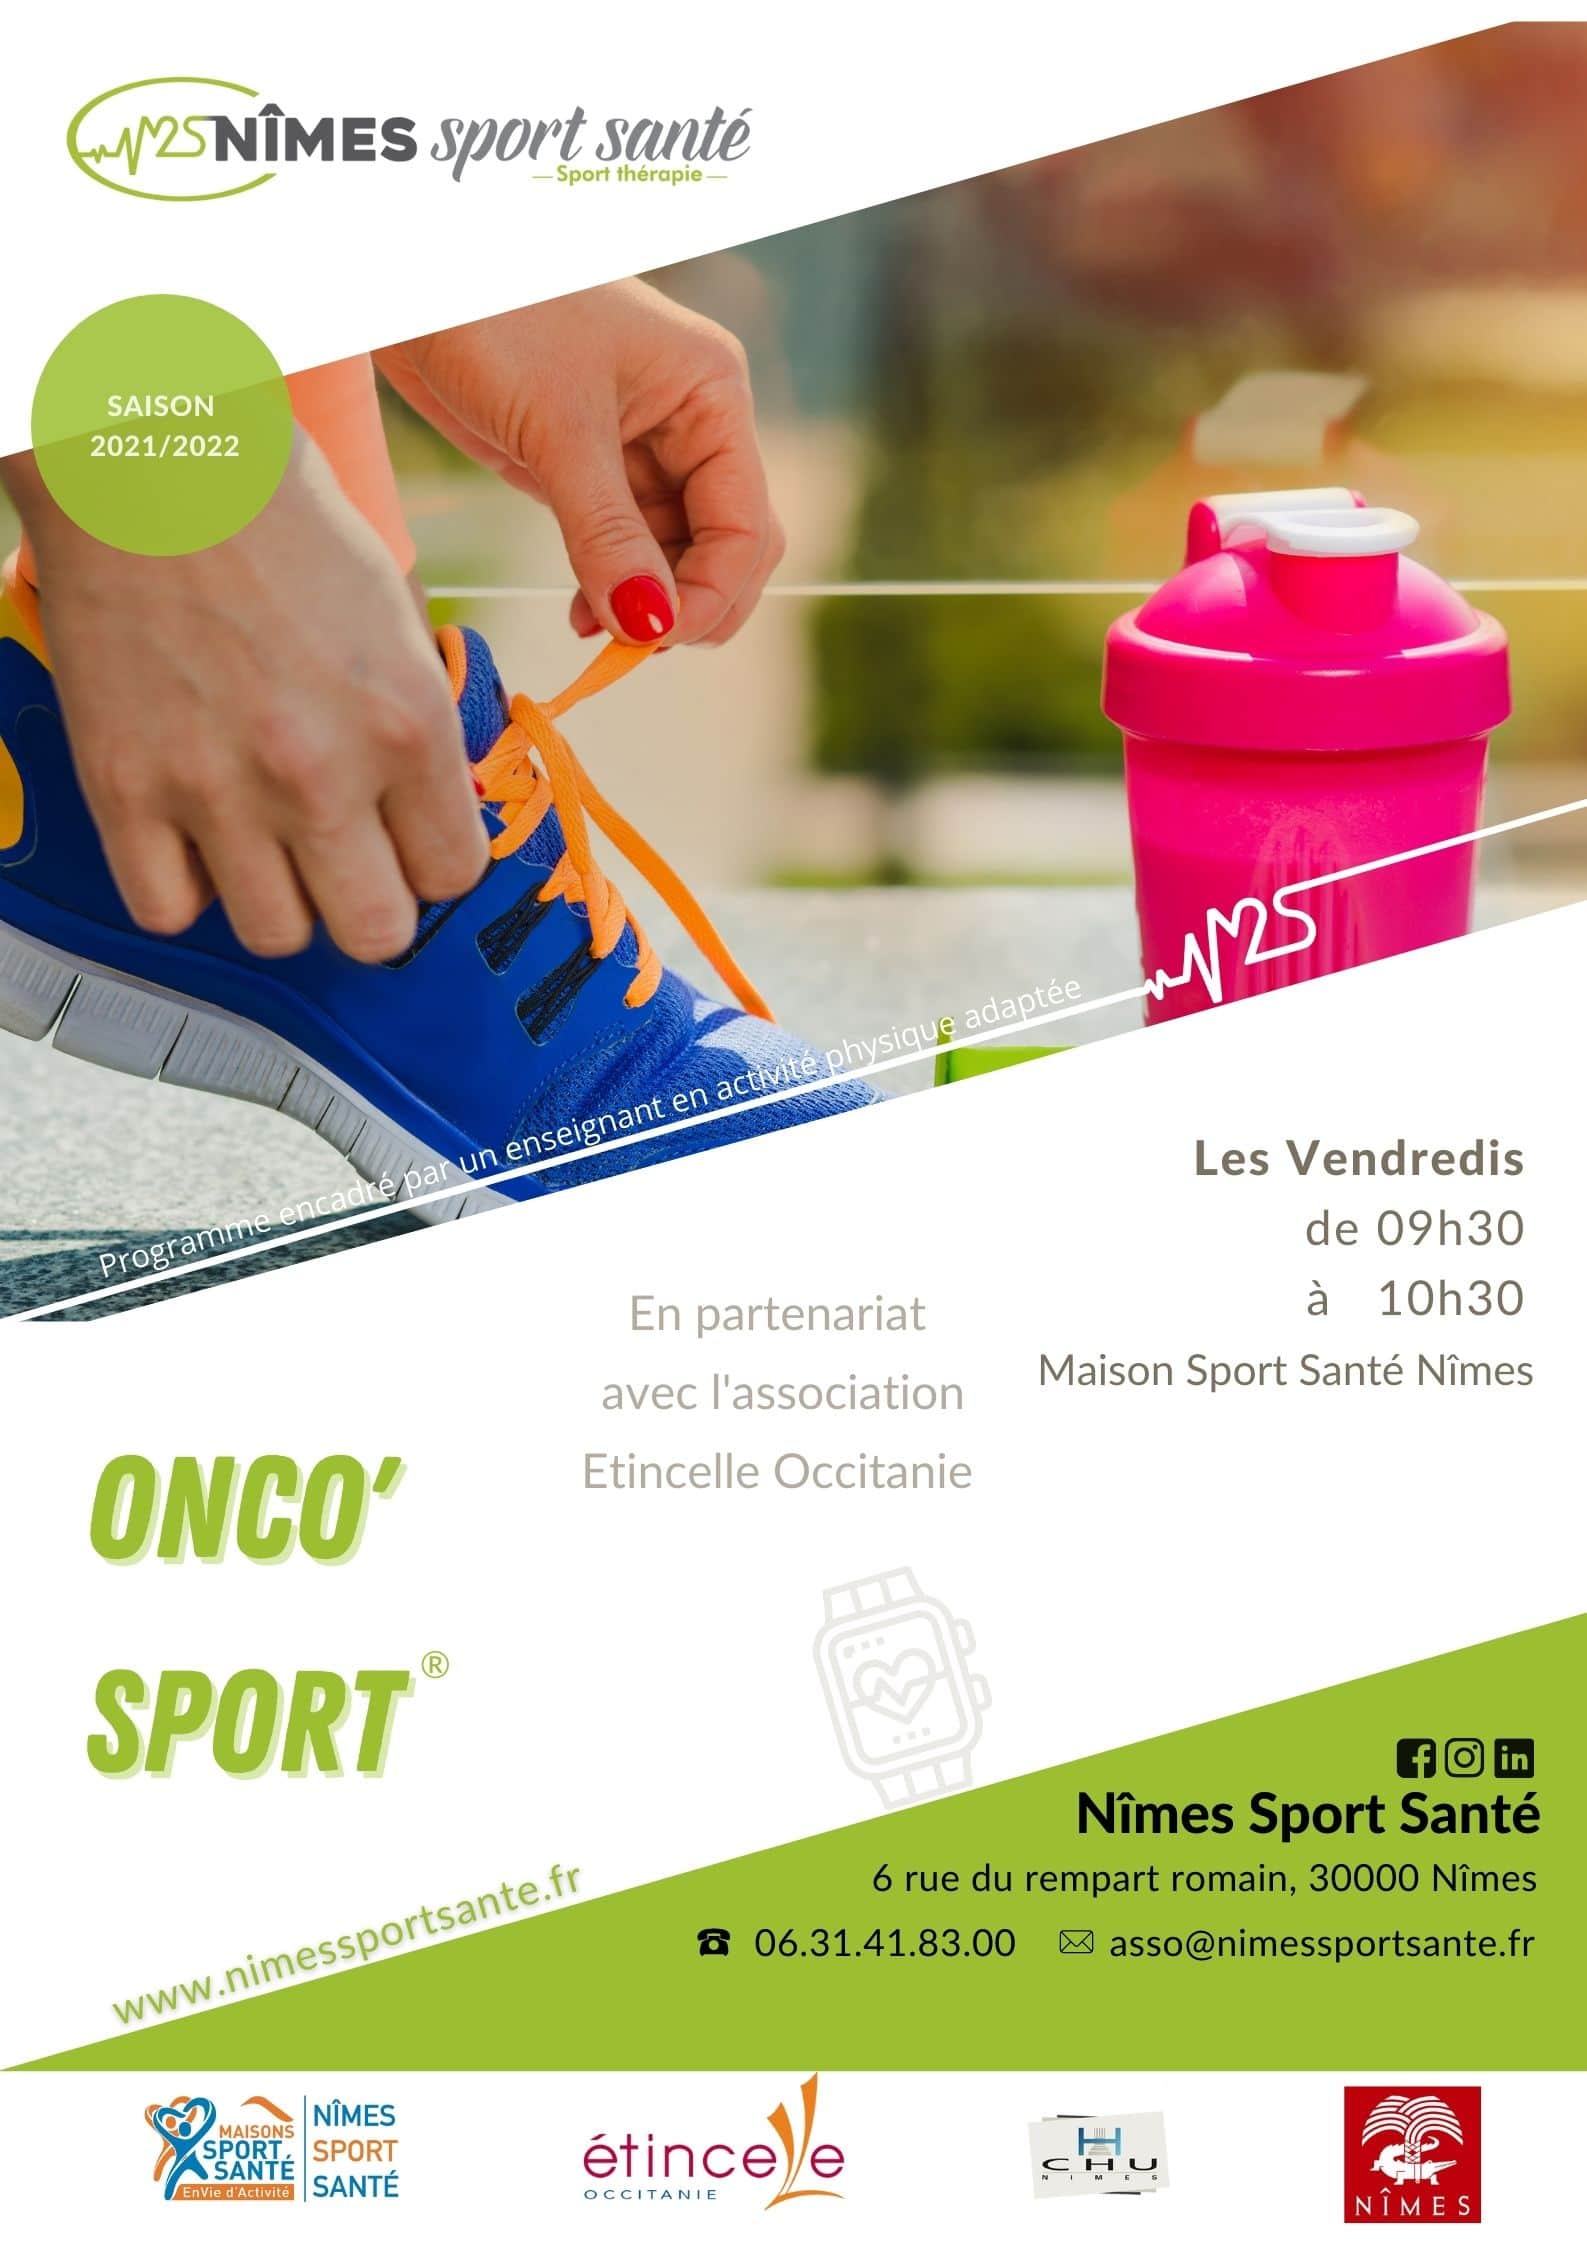 Onco sport 2